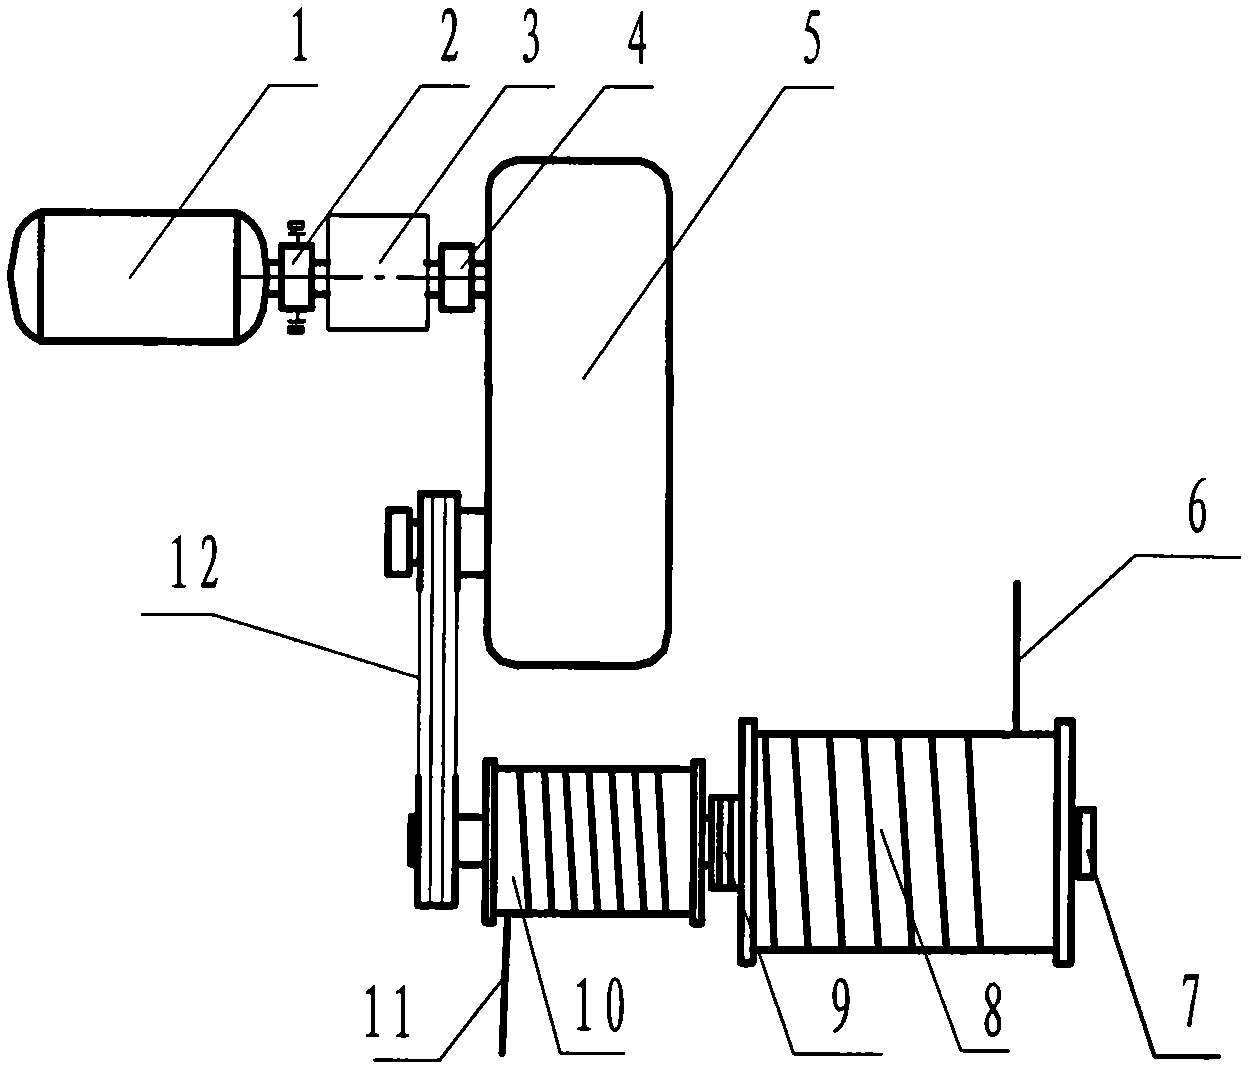 Electromechanical commutator for oil pumping unit